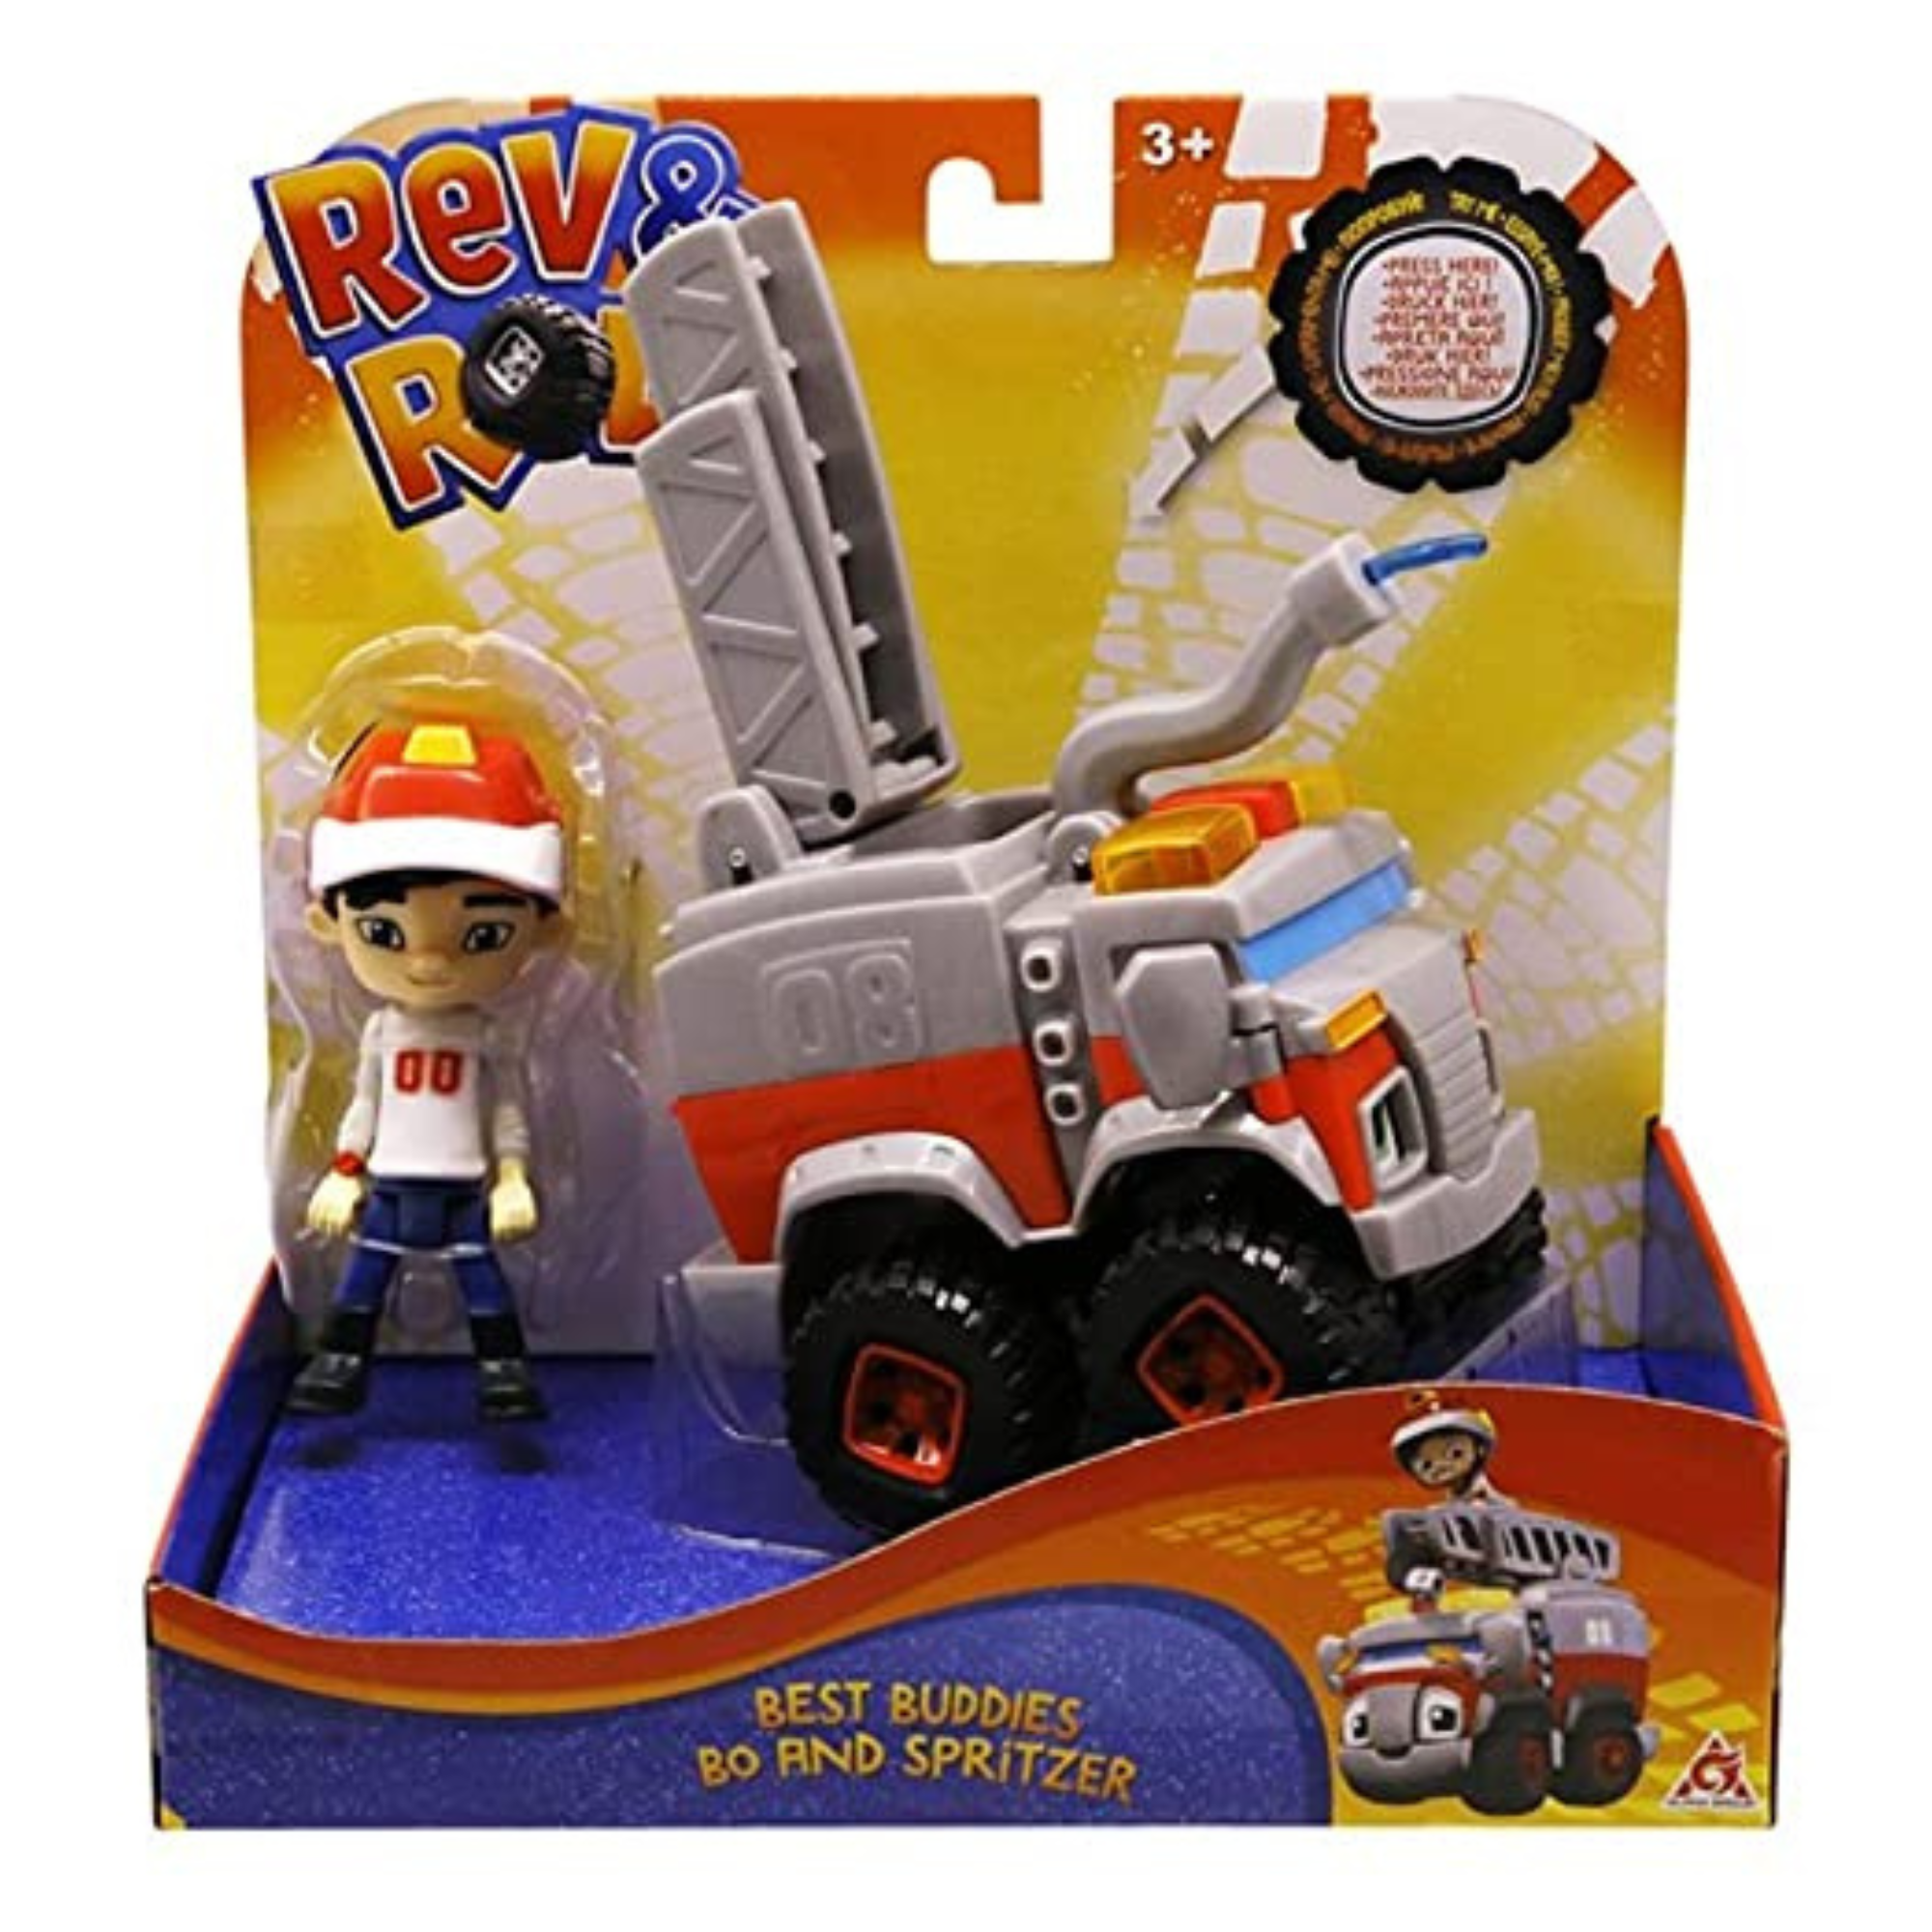 Rev & Roll Best Buddies Bo and Spritzer - Fire Engine Truck Toy 10cm Figure - Toptoys2u